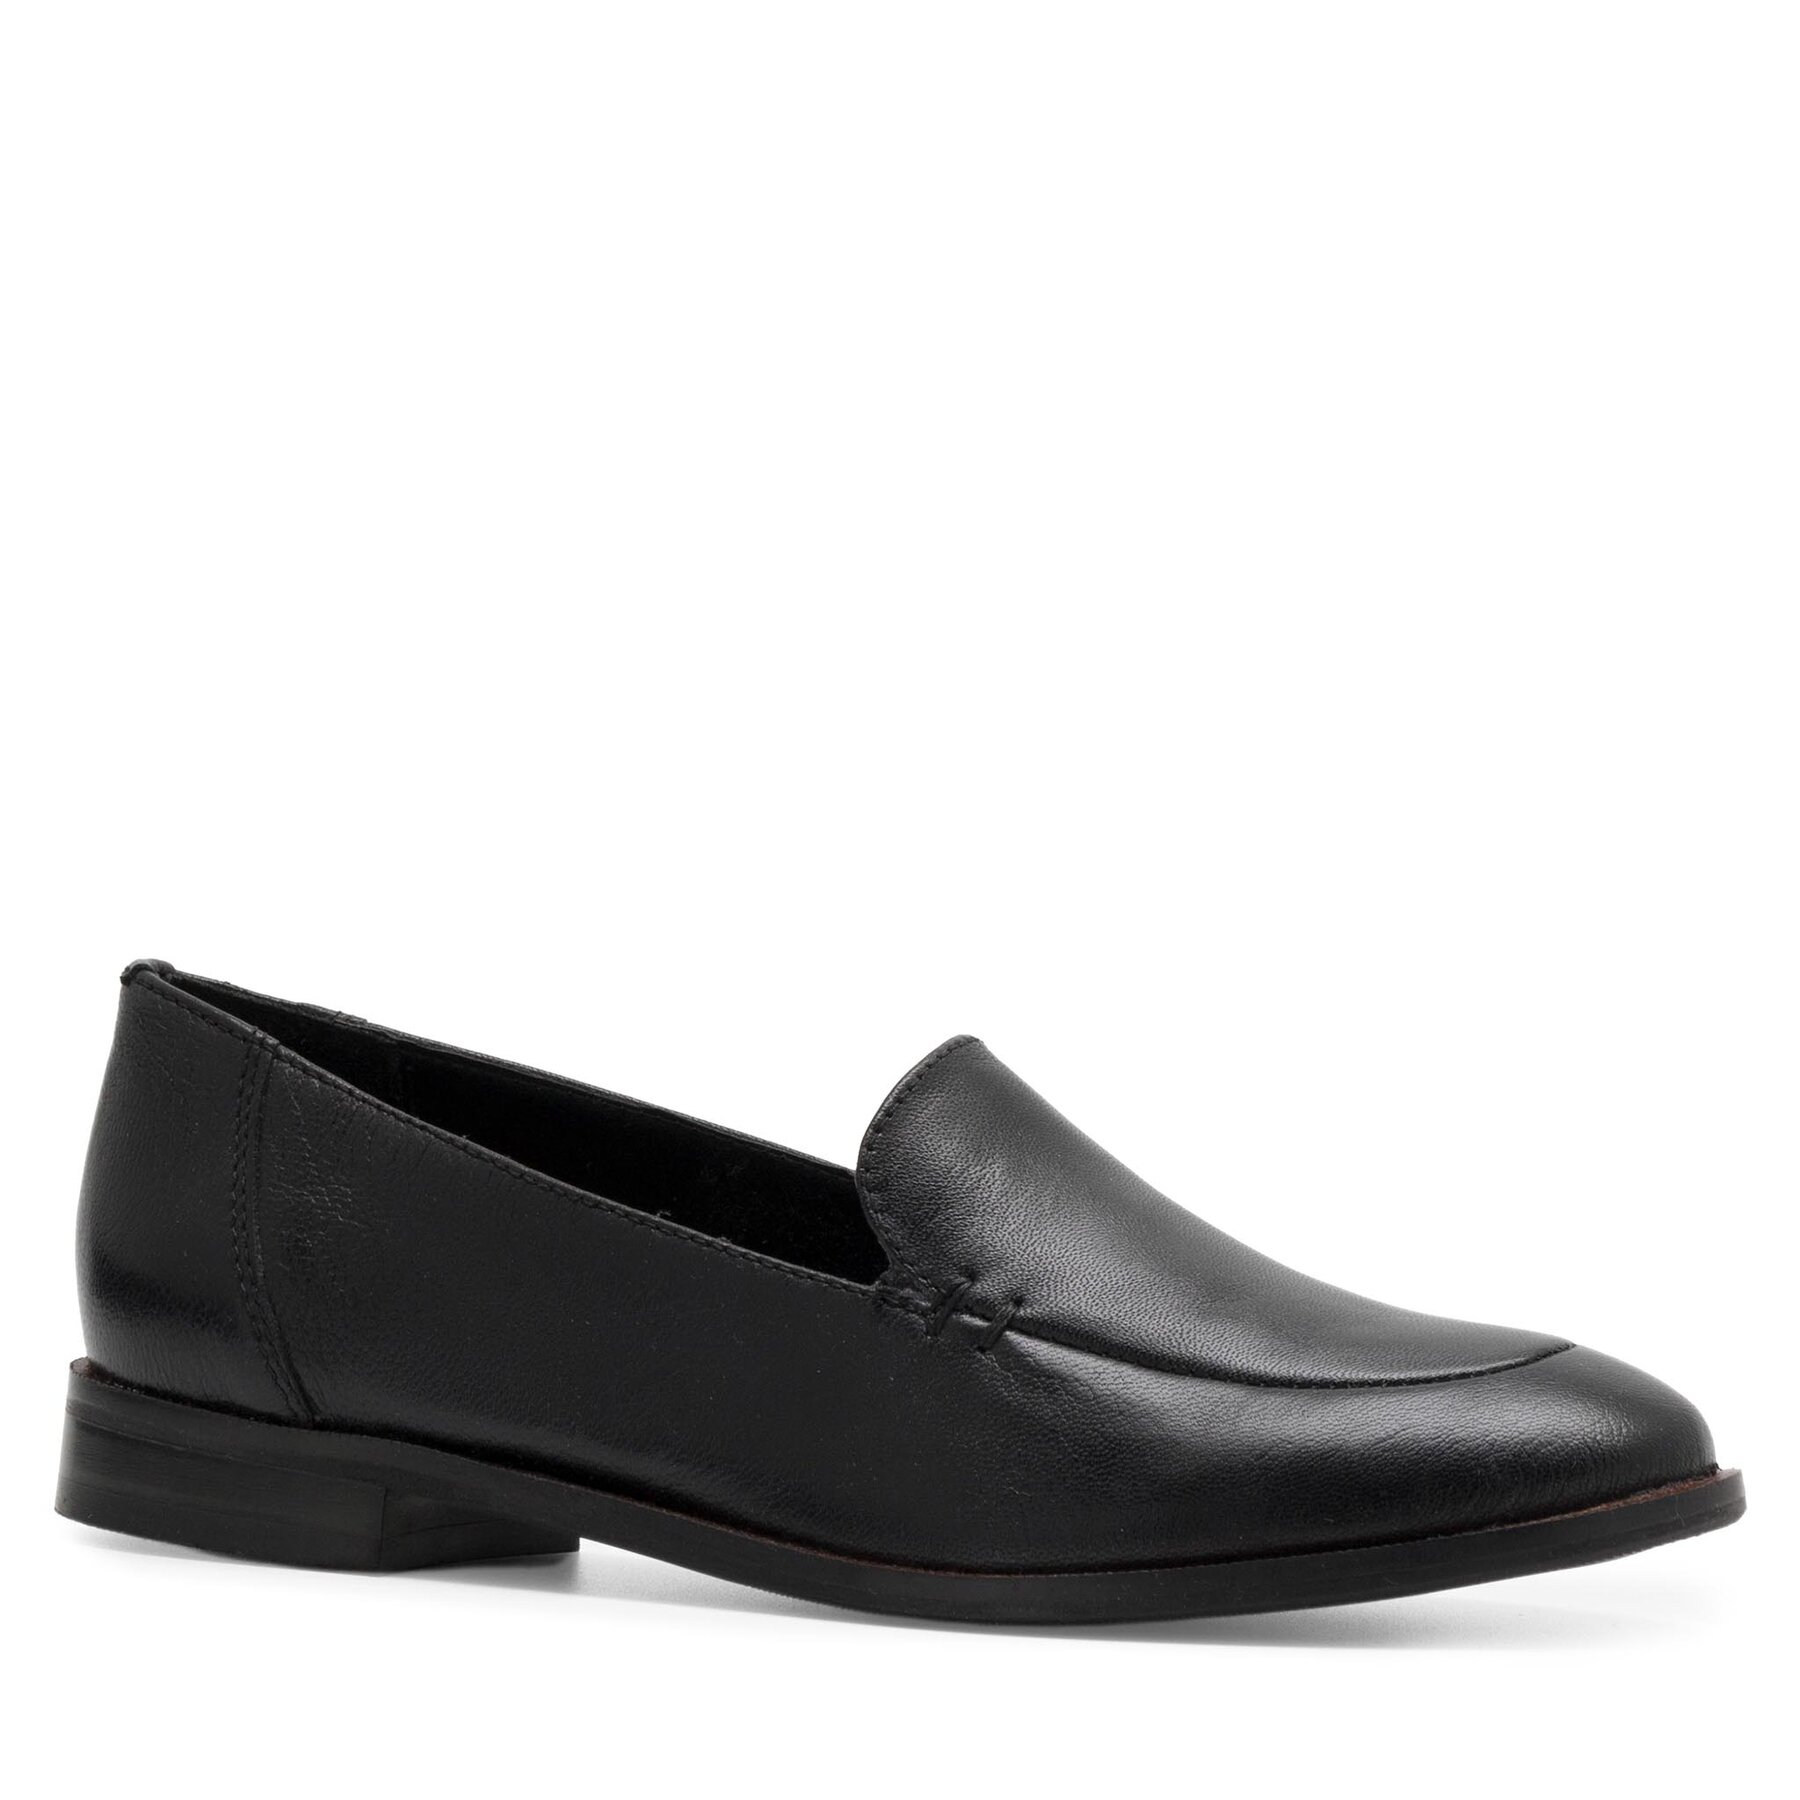 Cipele Lasocki WI23-3309-01 Black